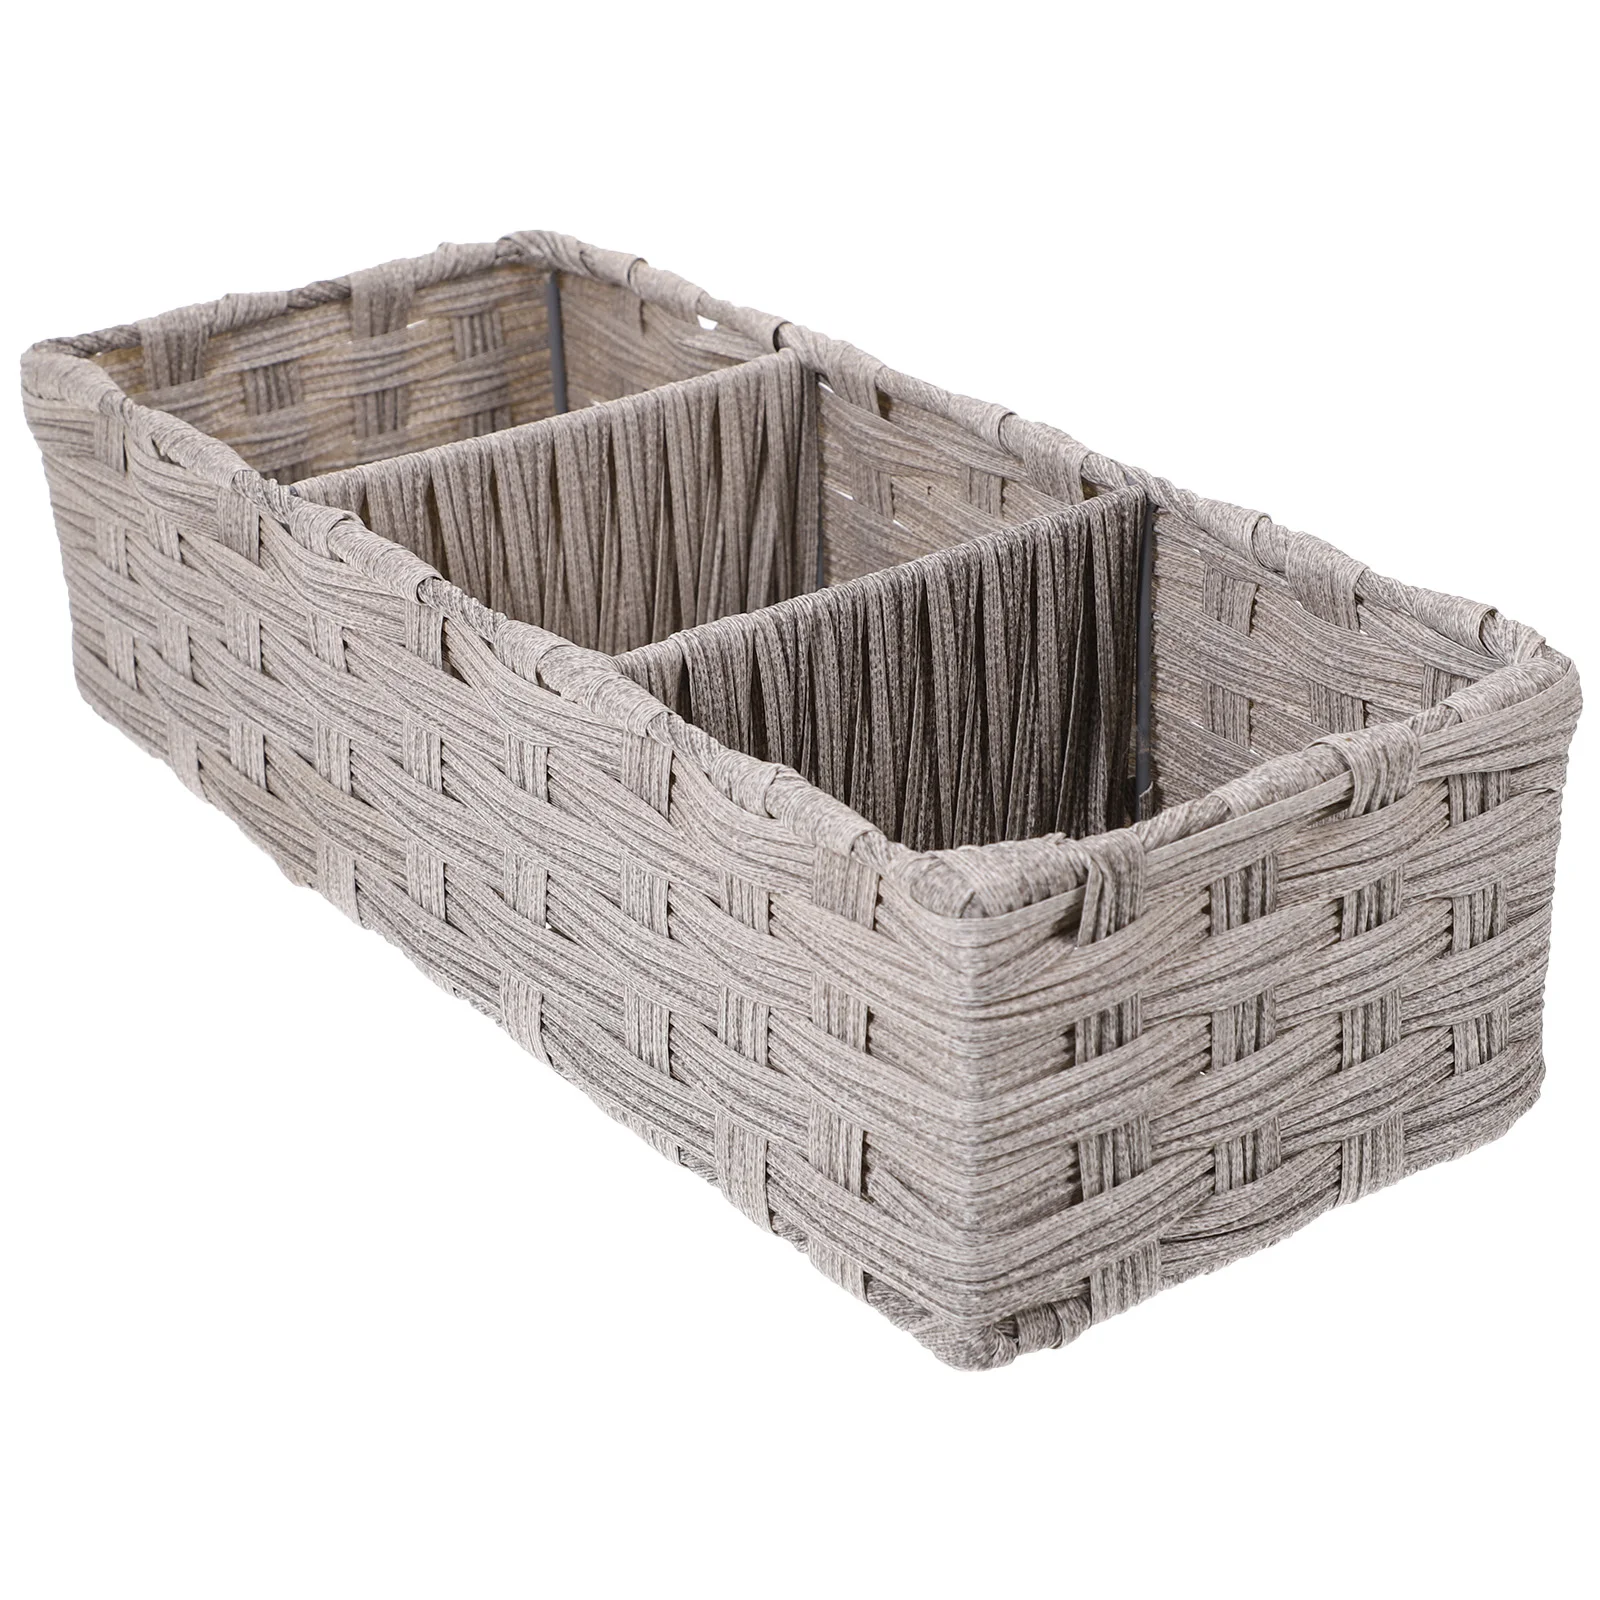 

Basket Storage Wicker Baskets Woven Organizer Rattan Seagrass Box Holder Toilet Hyacinth Sundries Coffee Bins Divided